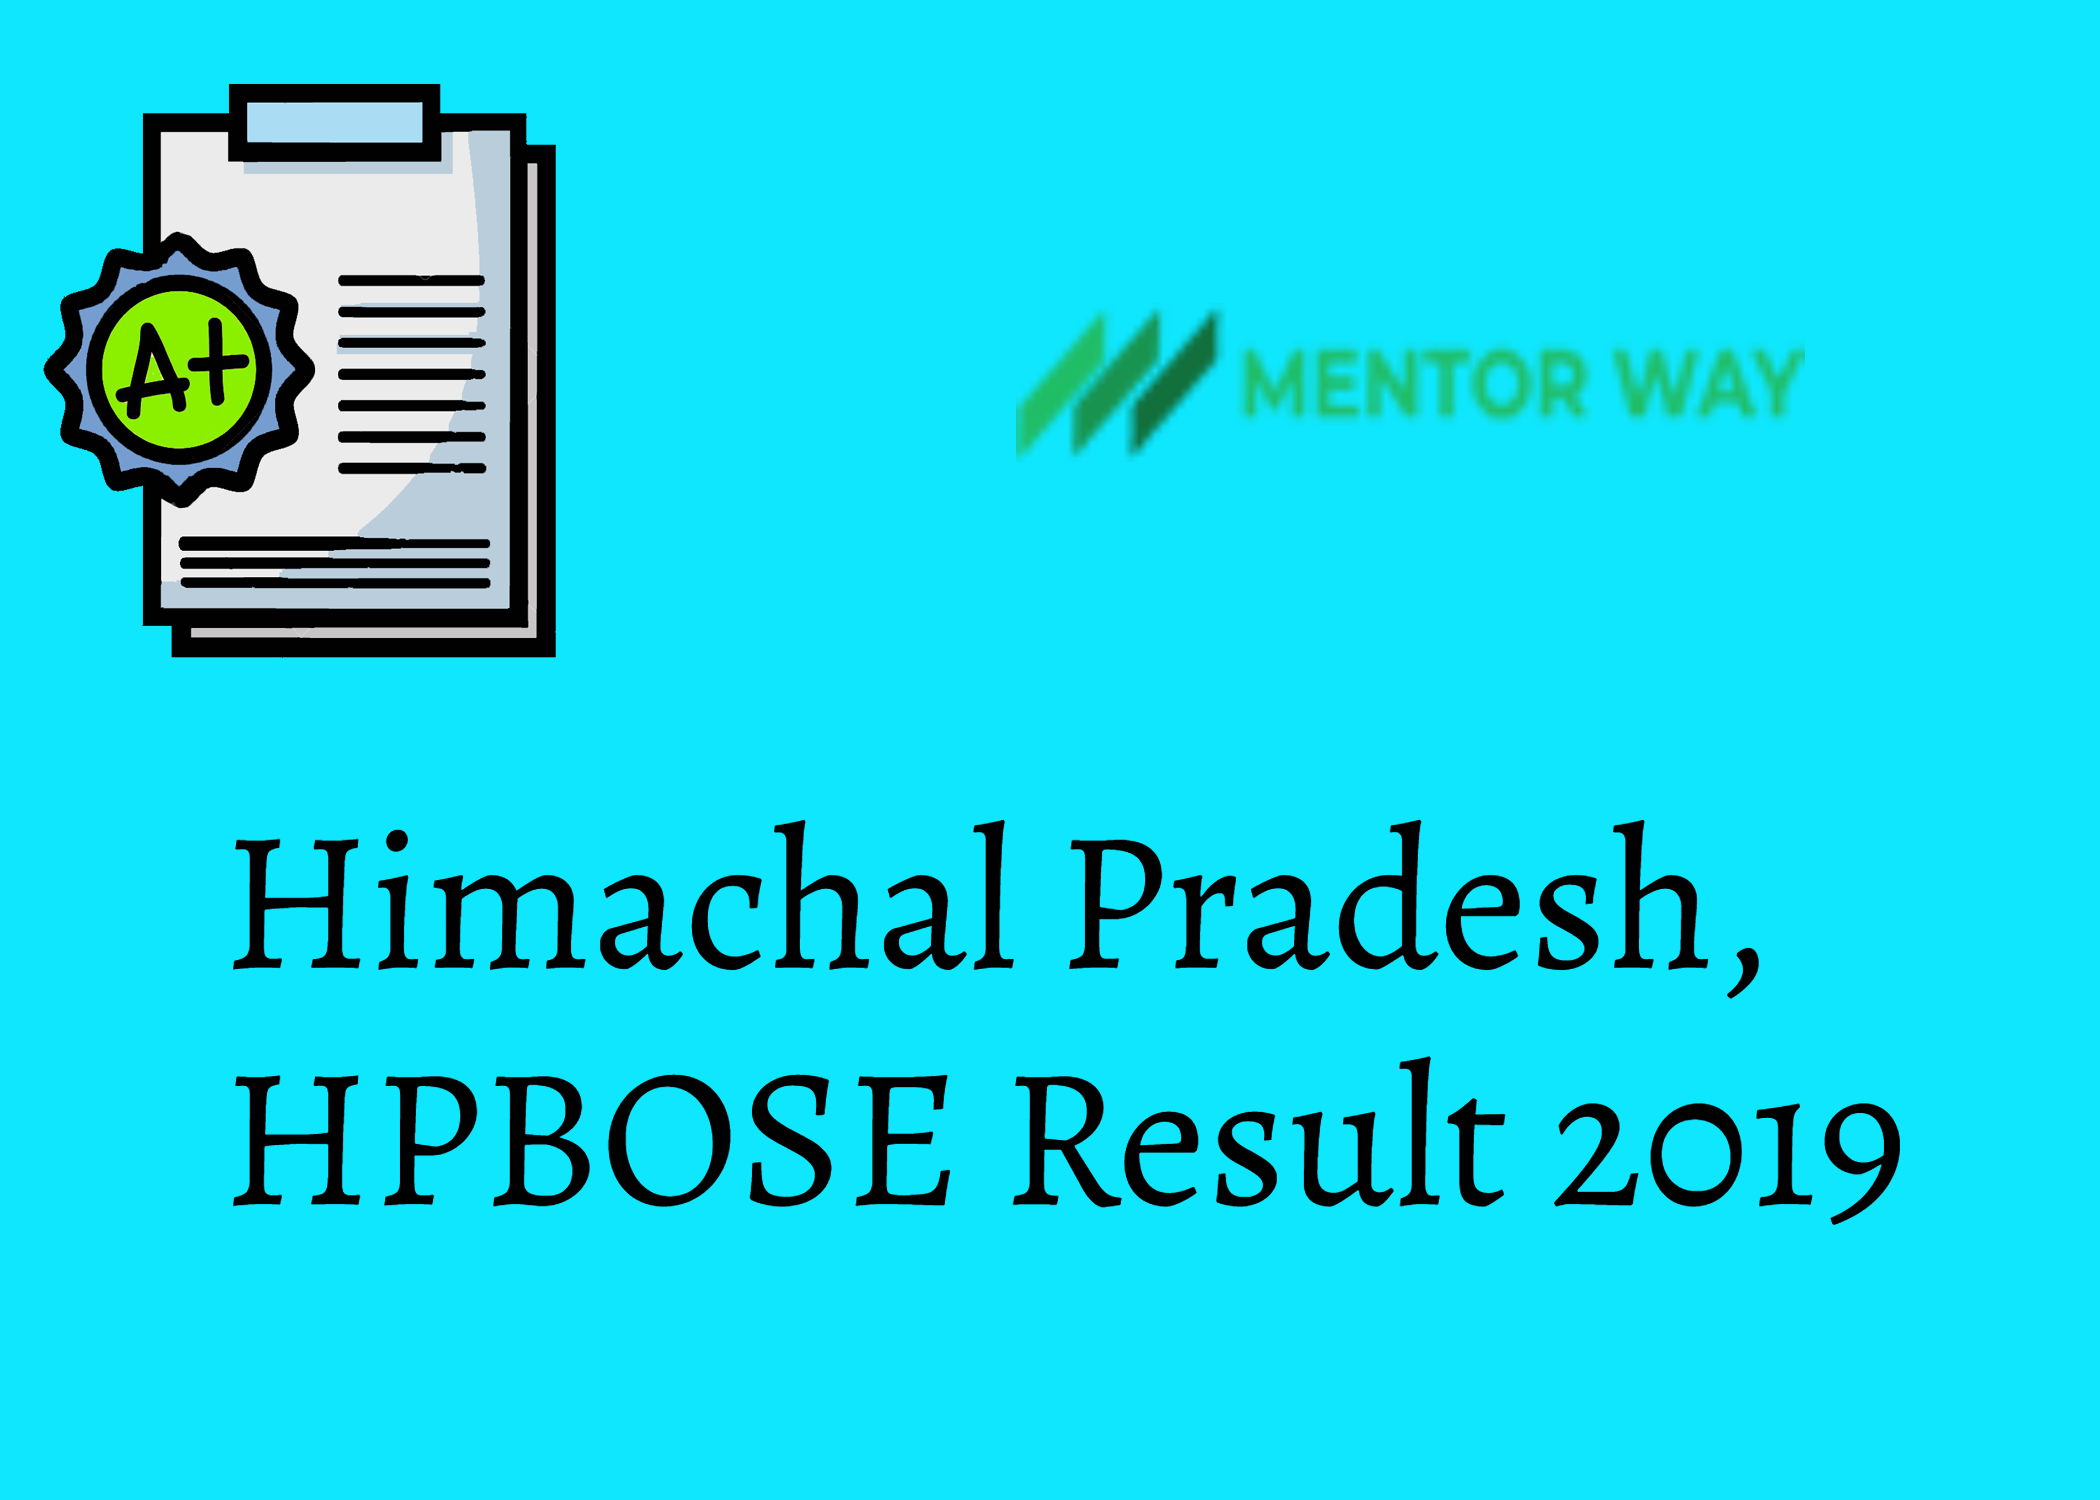 Himachal Pradesh, HPBOSE Result 2019